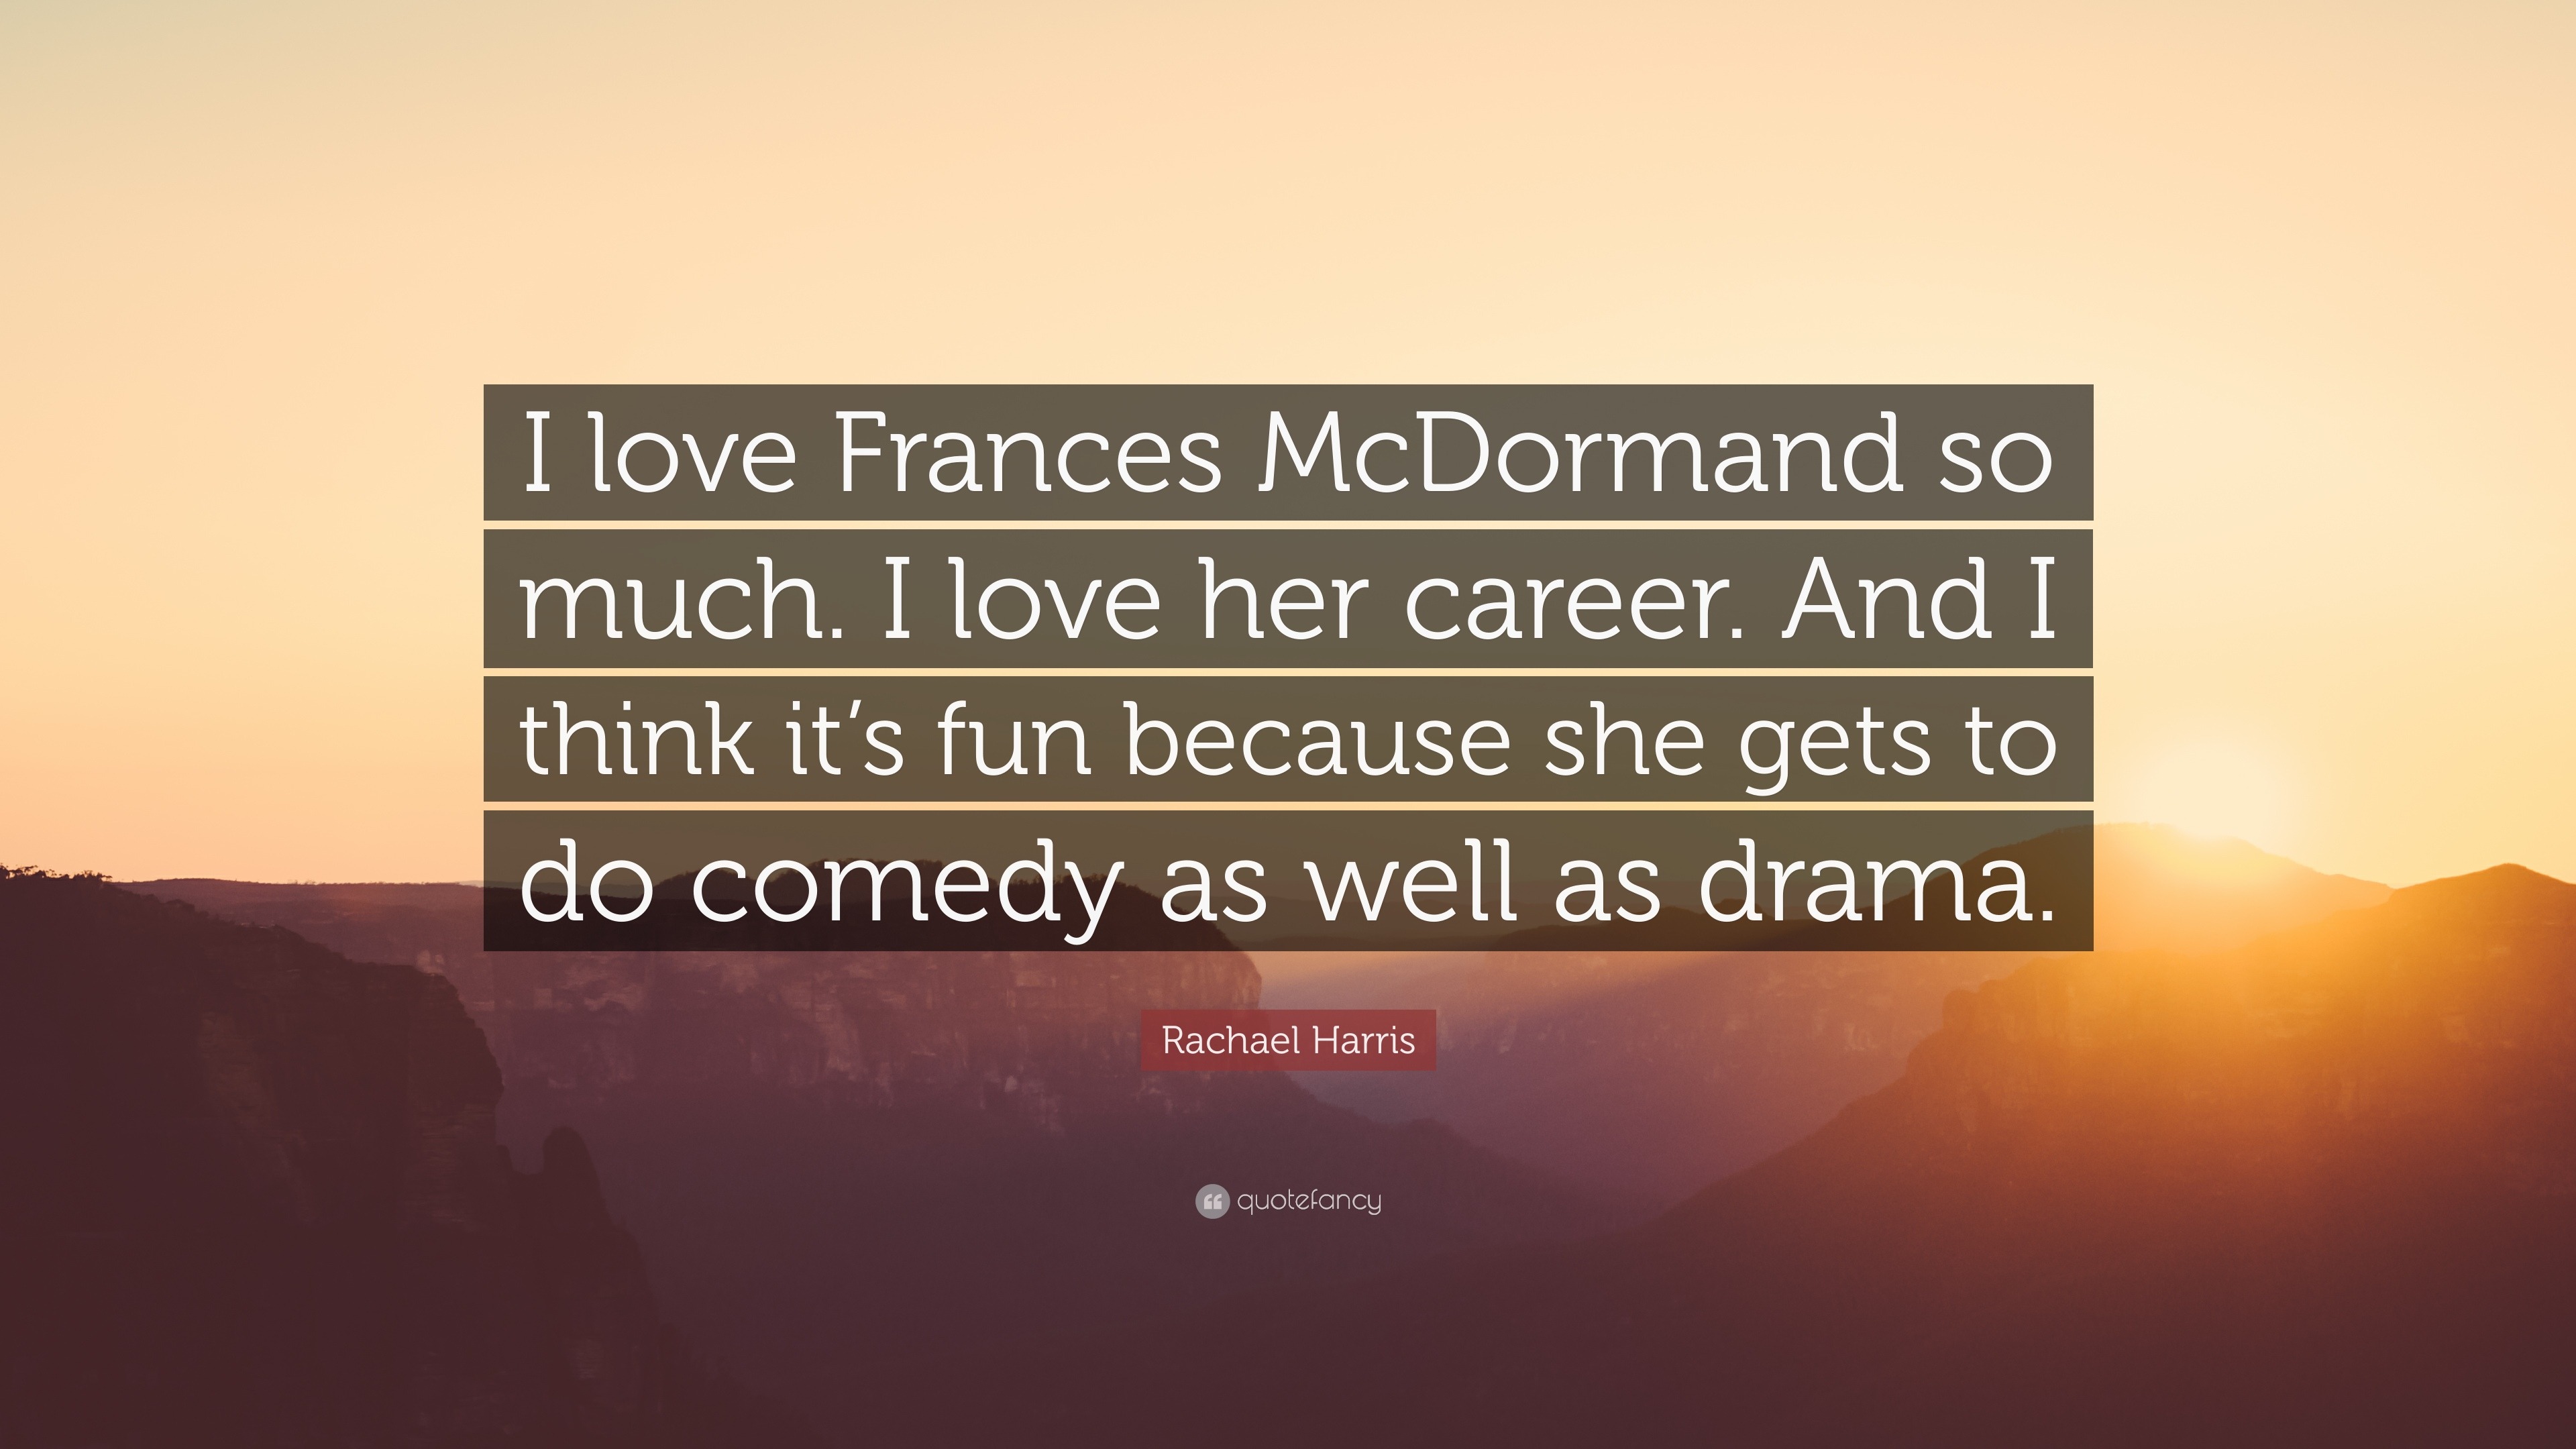 Rachael Harris Quote “I love Frances McDormand so much I love her career